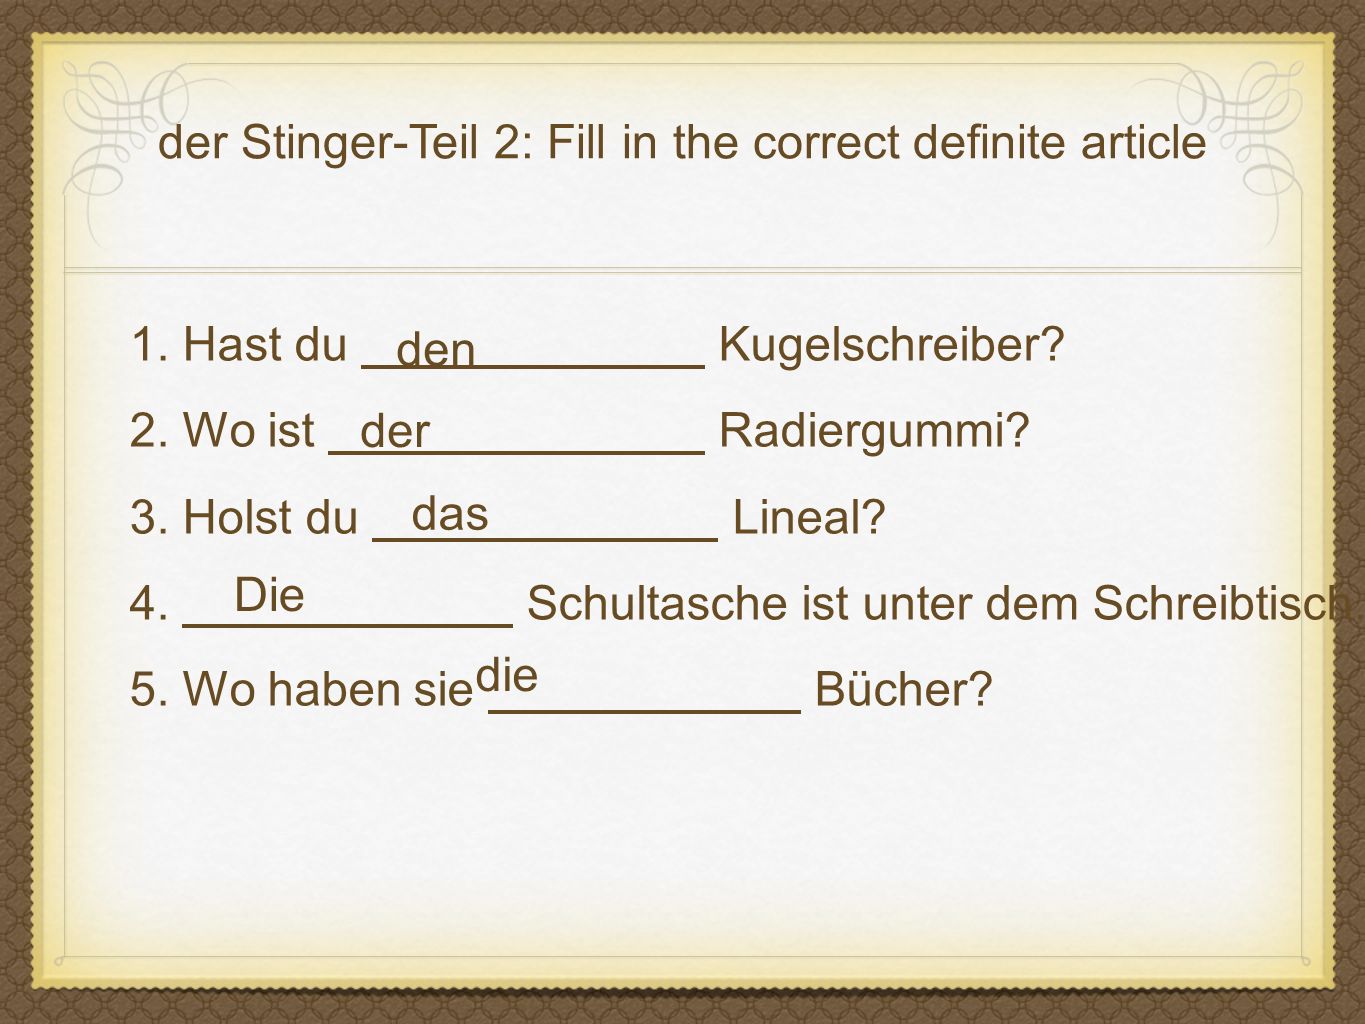 der Stinger-Teil 2: Fill in the correct definite article